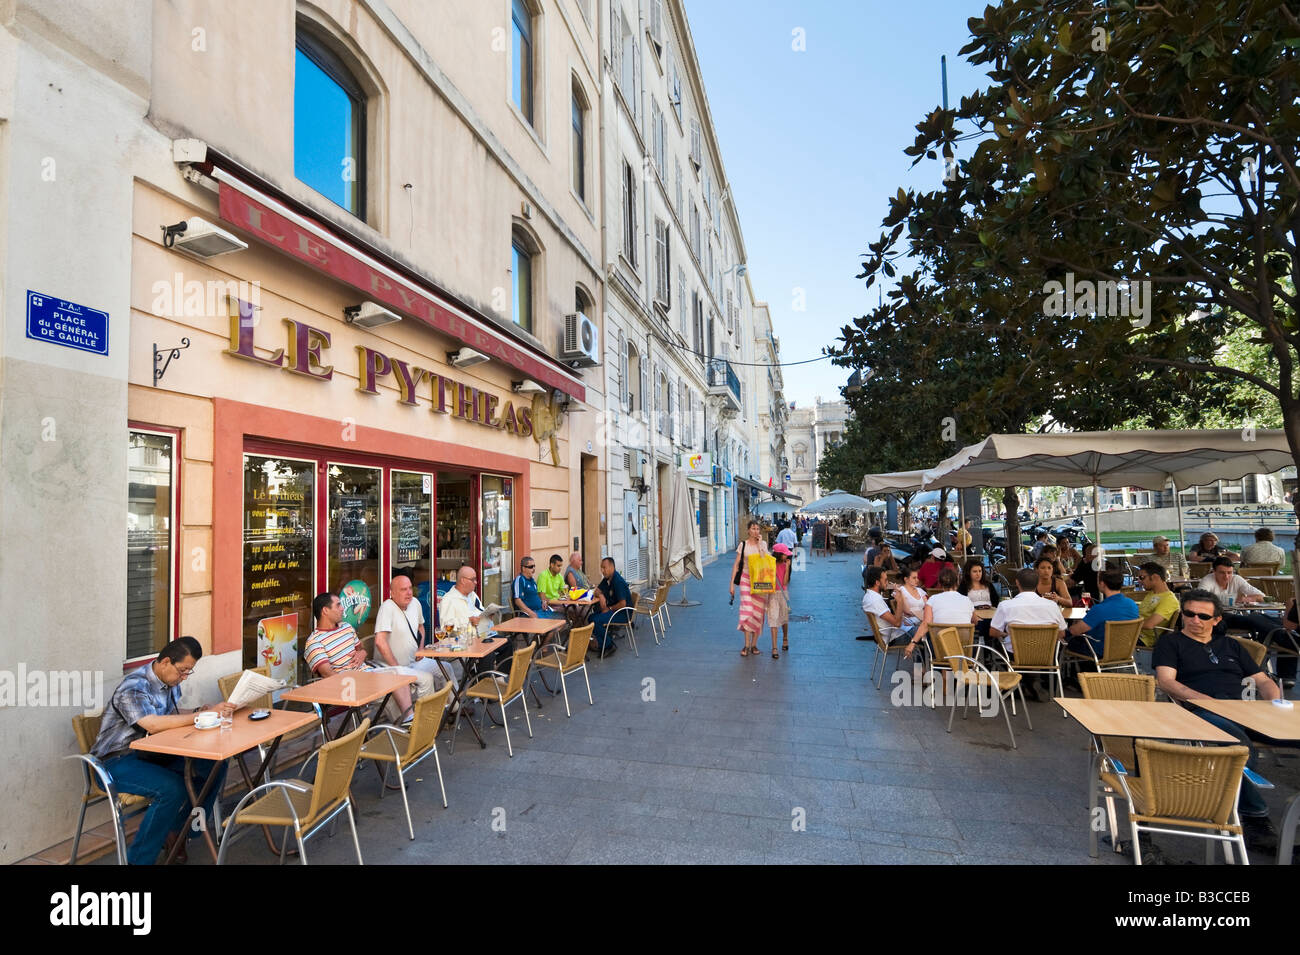 Il Cafe Bar in Place du General de Gaulle, Vieux Port District, Marsiglia, Cote d'Azur, in Francia Foto Stock